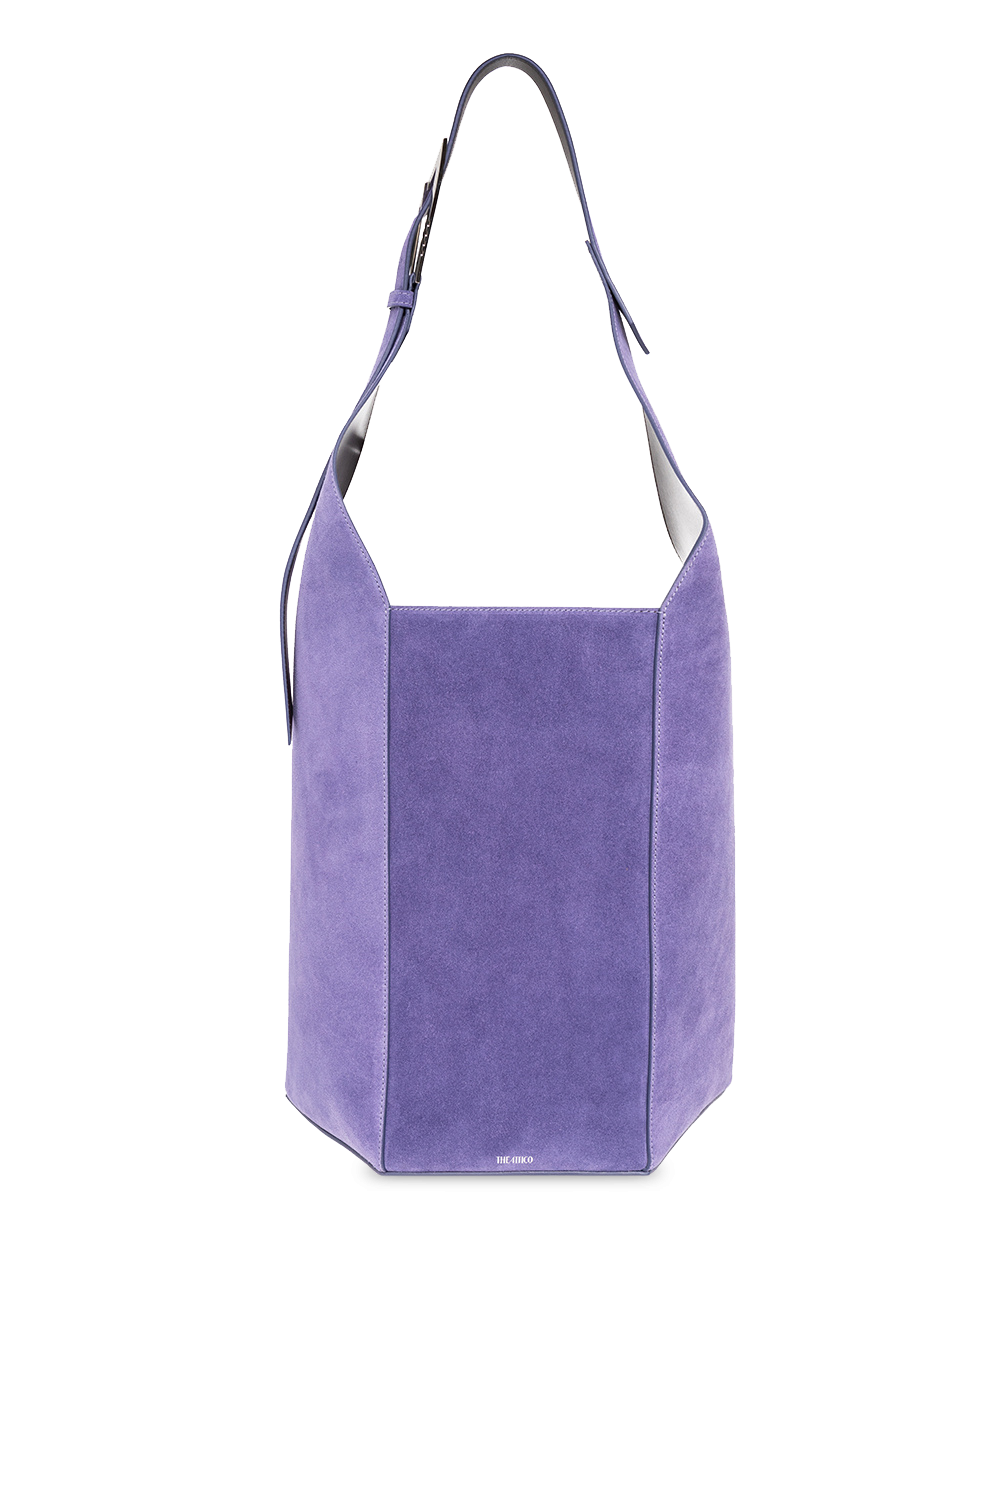 The Attico ‘12PM’ shoulder bag